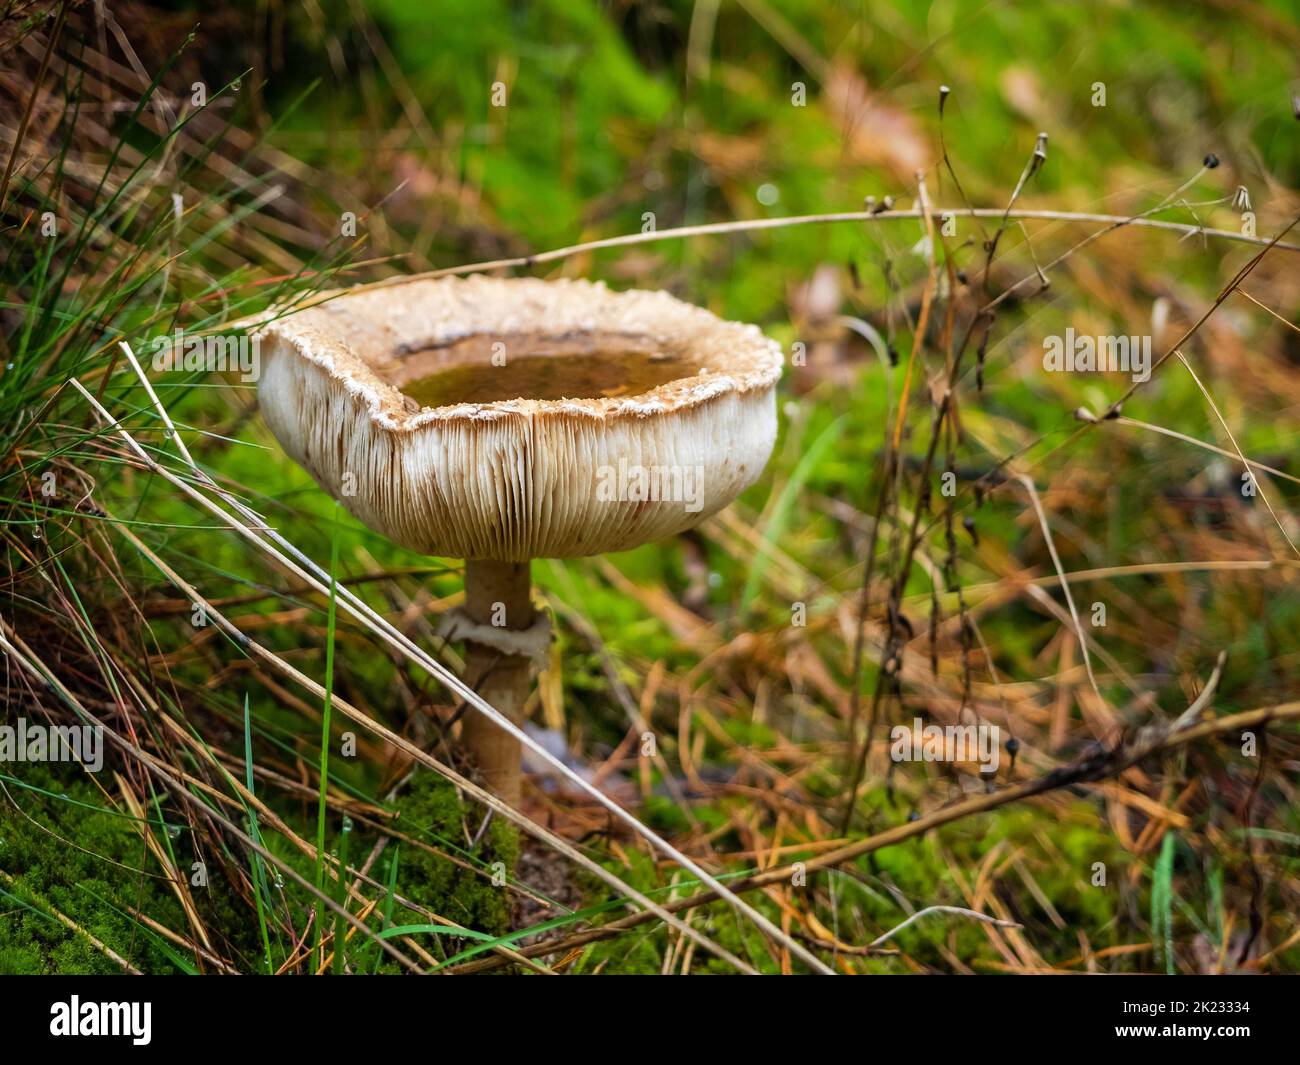 a mushroom collect rainwater in a cap in a wild woodland in an autumn season Stock Photo